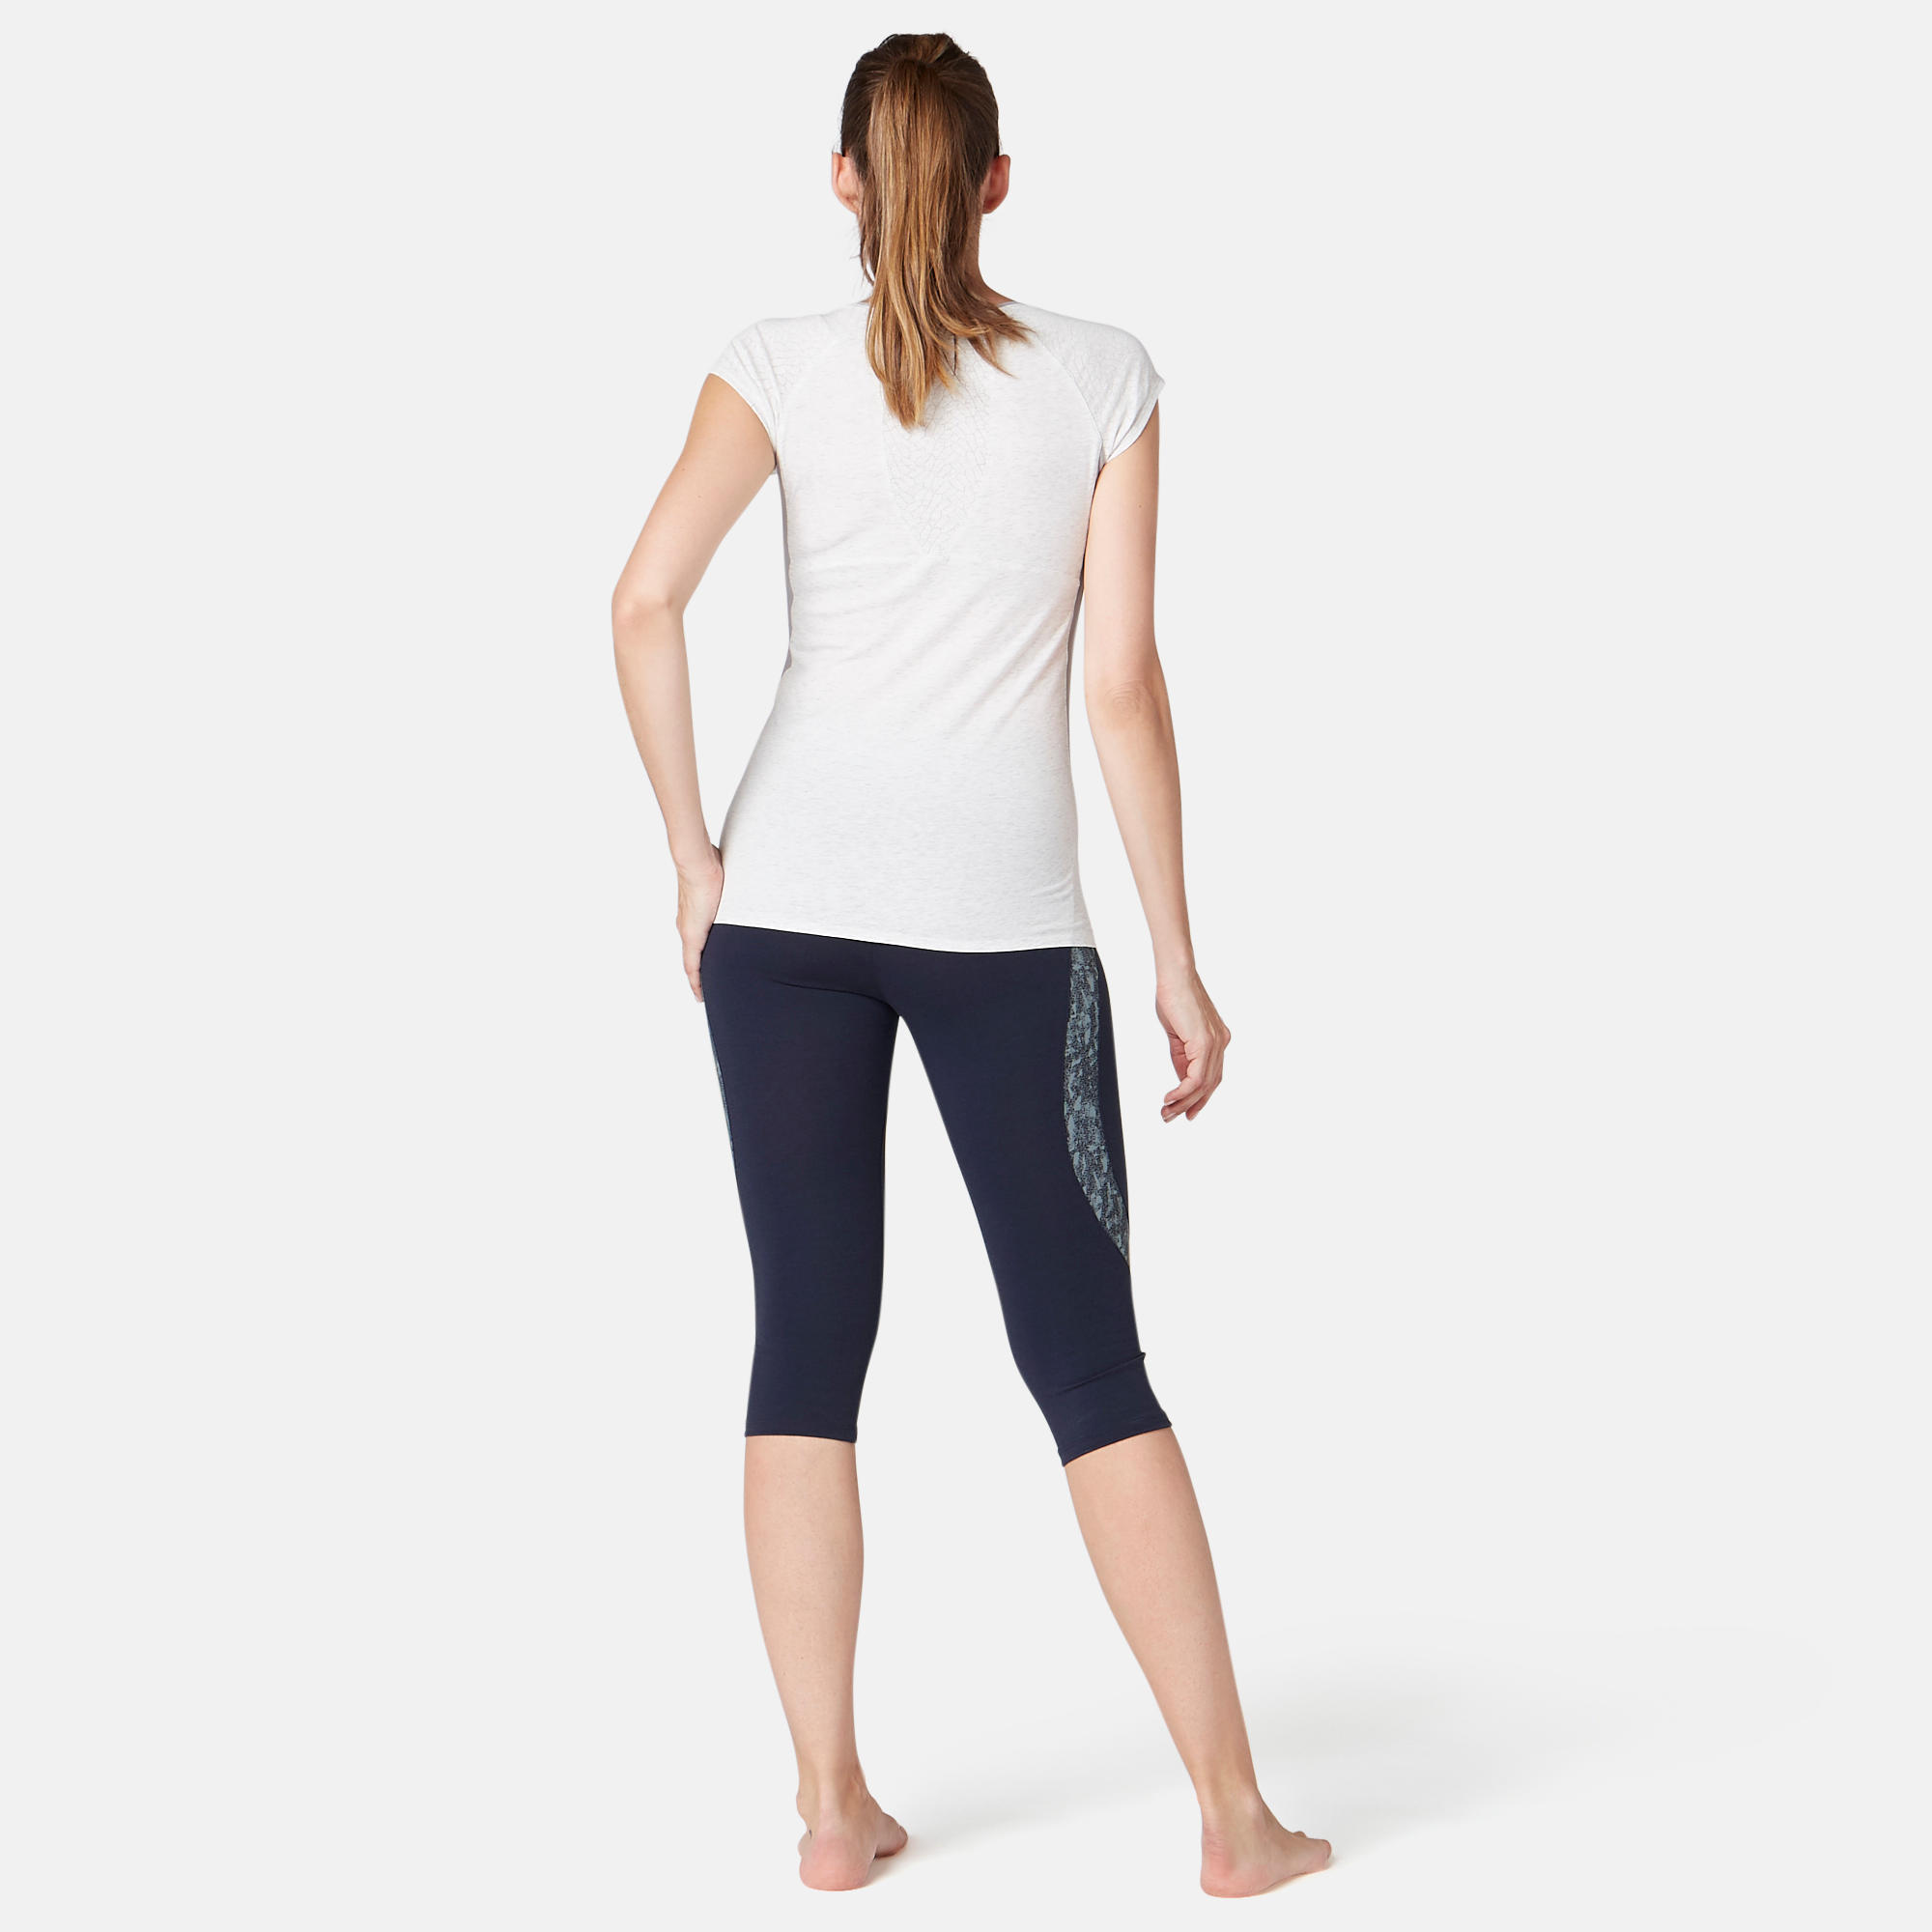 Women's Slim Fitness Cropped Bottoms 520 - Navy Blue 5/9